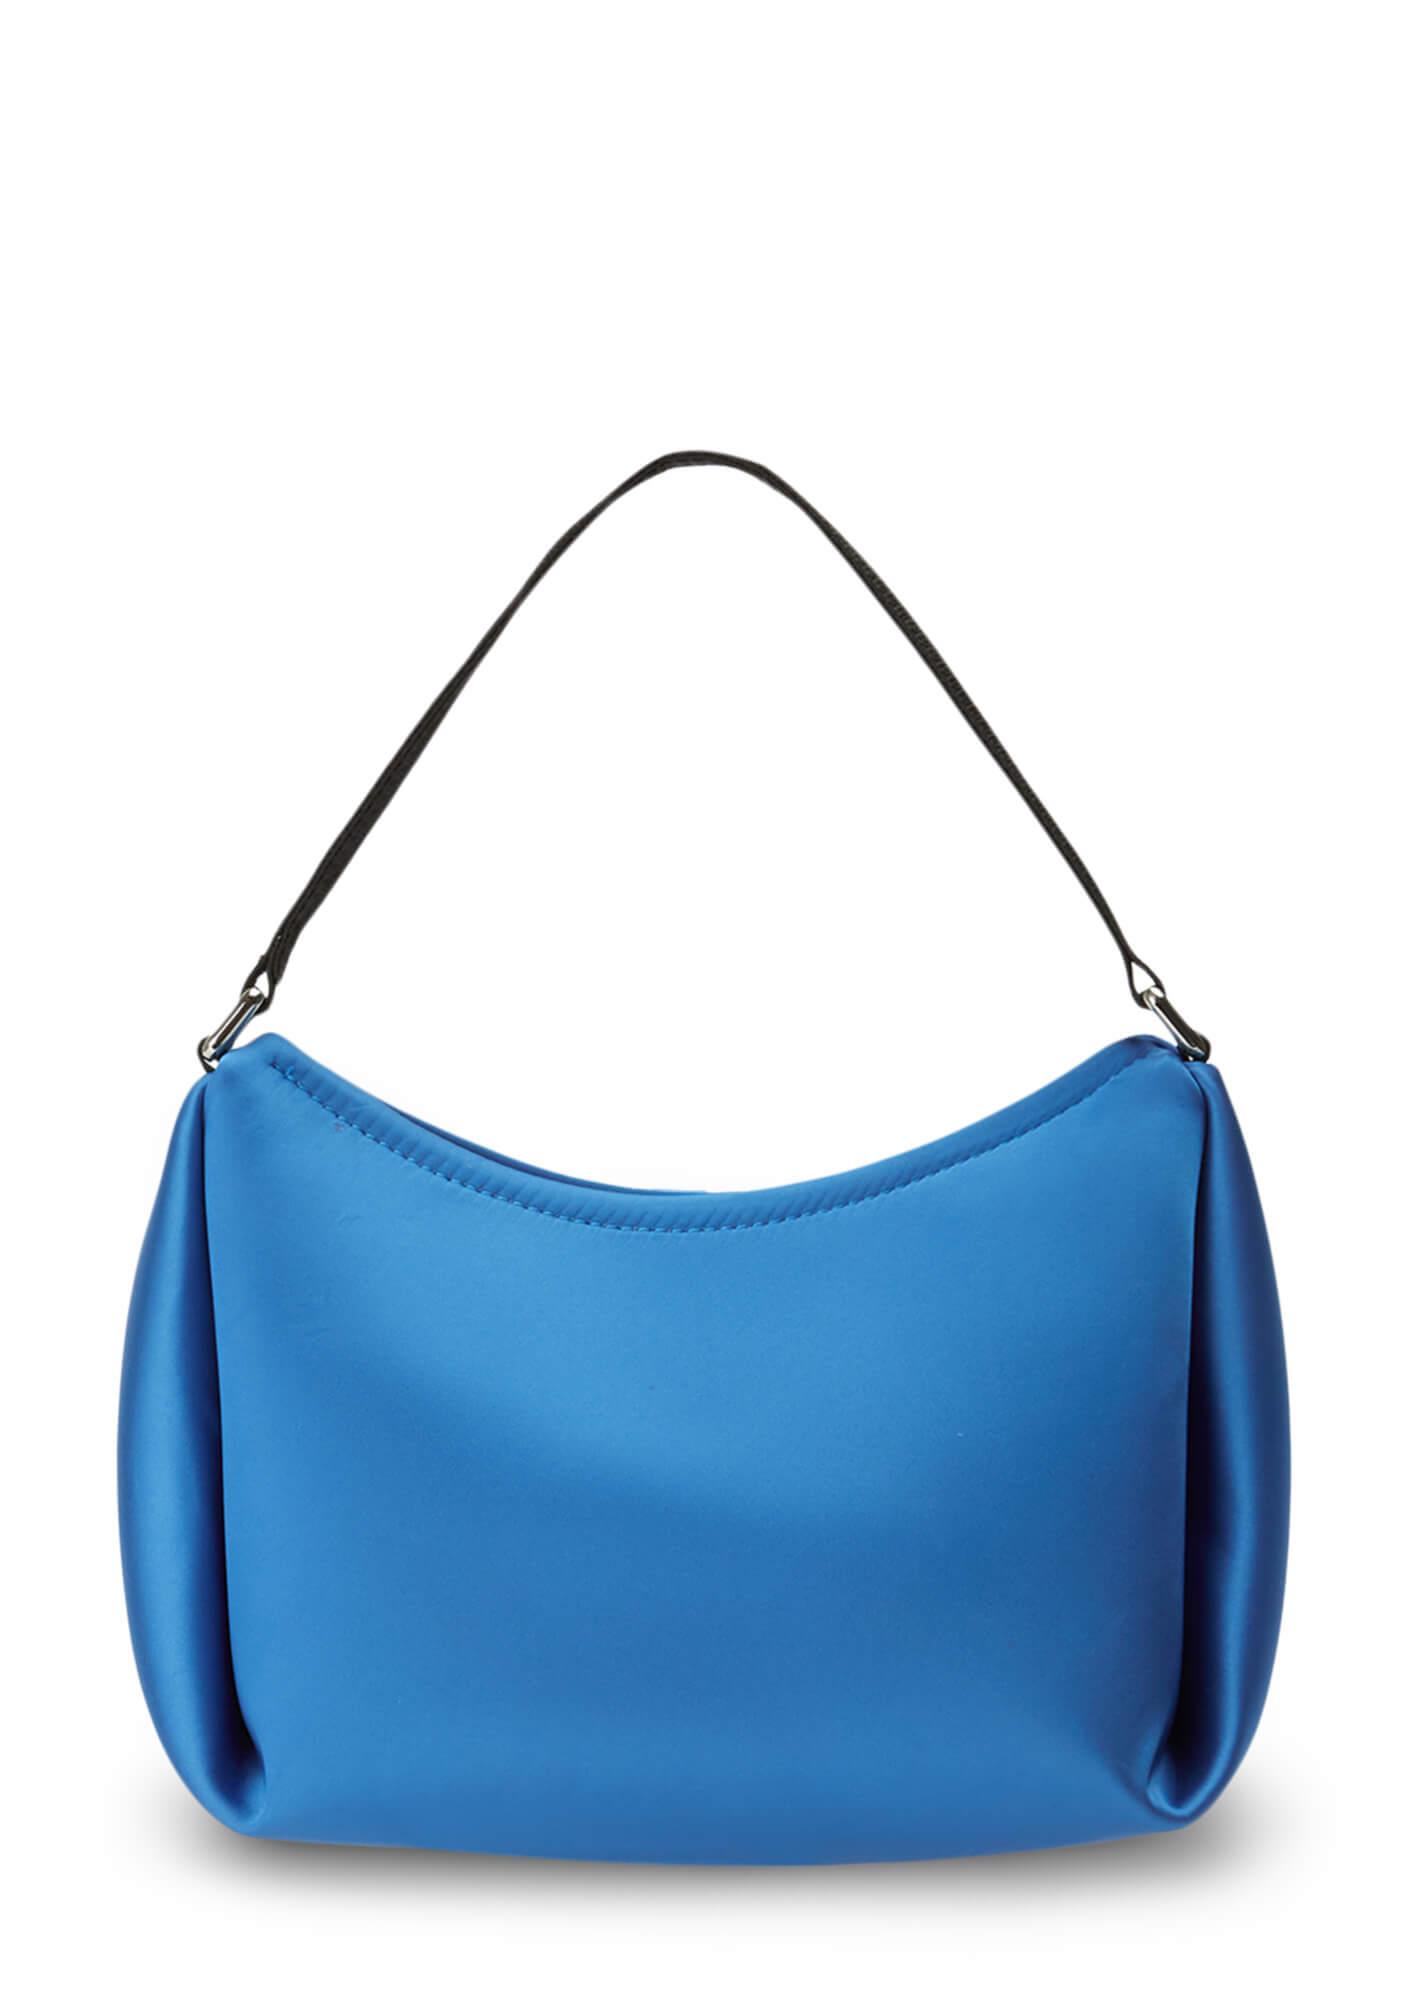 Tony Bianco Satin Darcy Shoulder Bag in Blue | Lyst